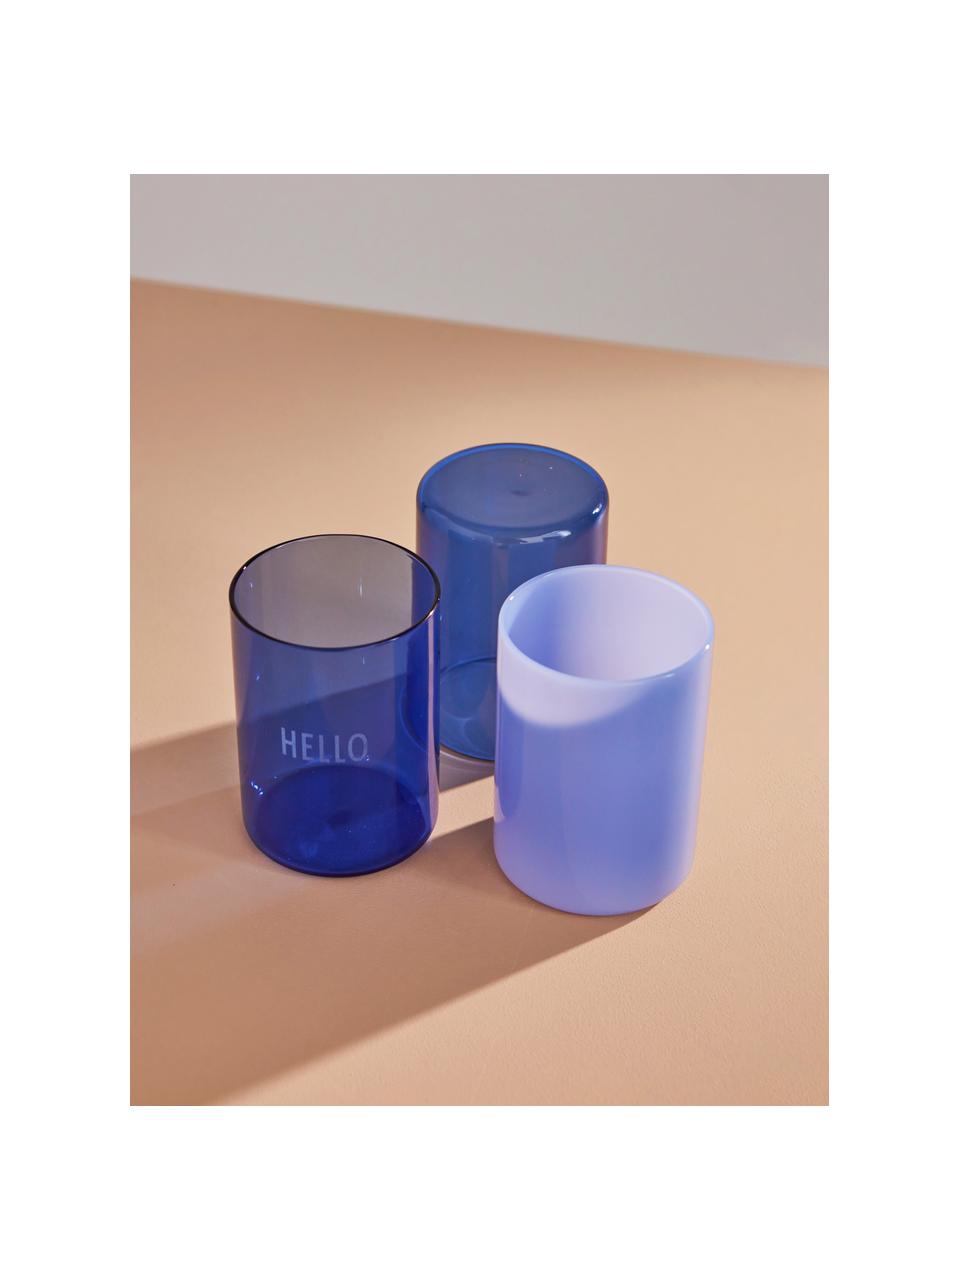 Sklenice Milky Favourite, Borosilikátové sklo, Modrá, Ø 8 cm, V 11 cm, 350 ml